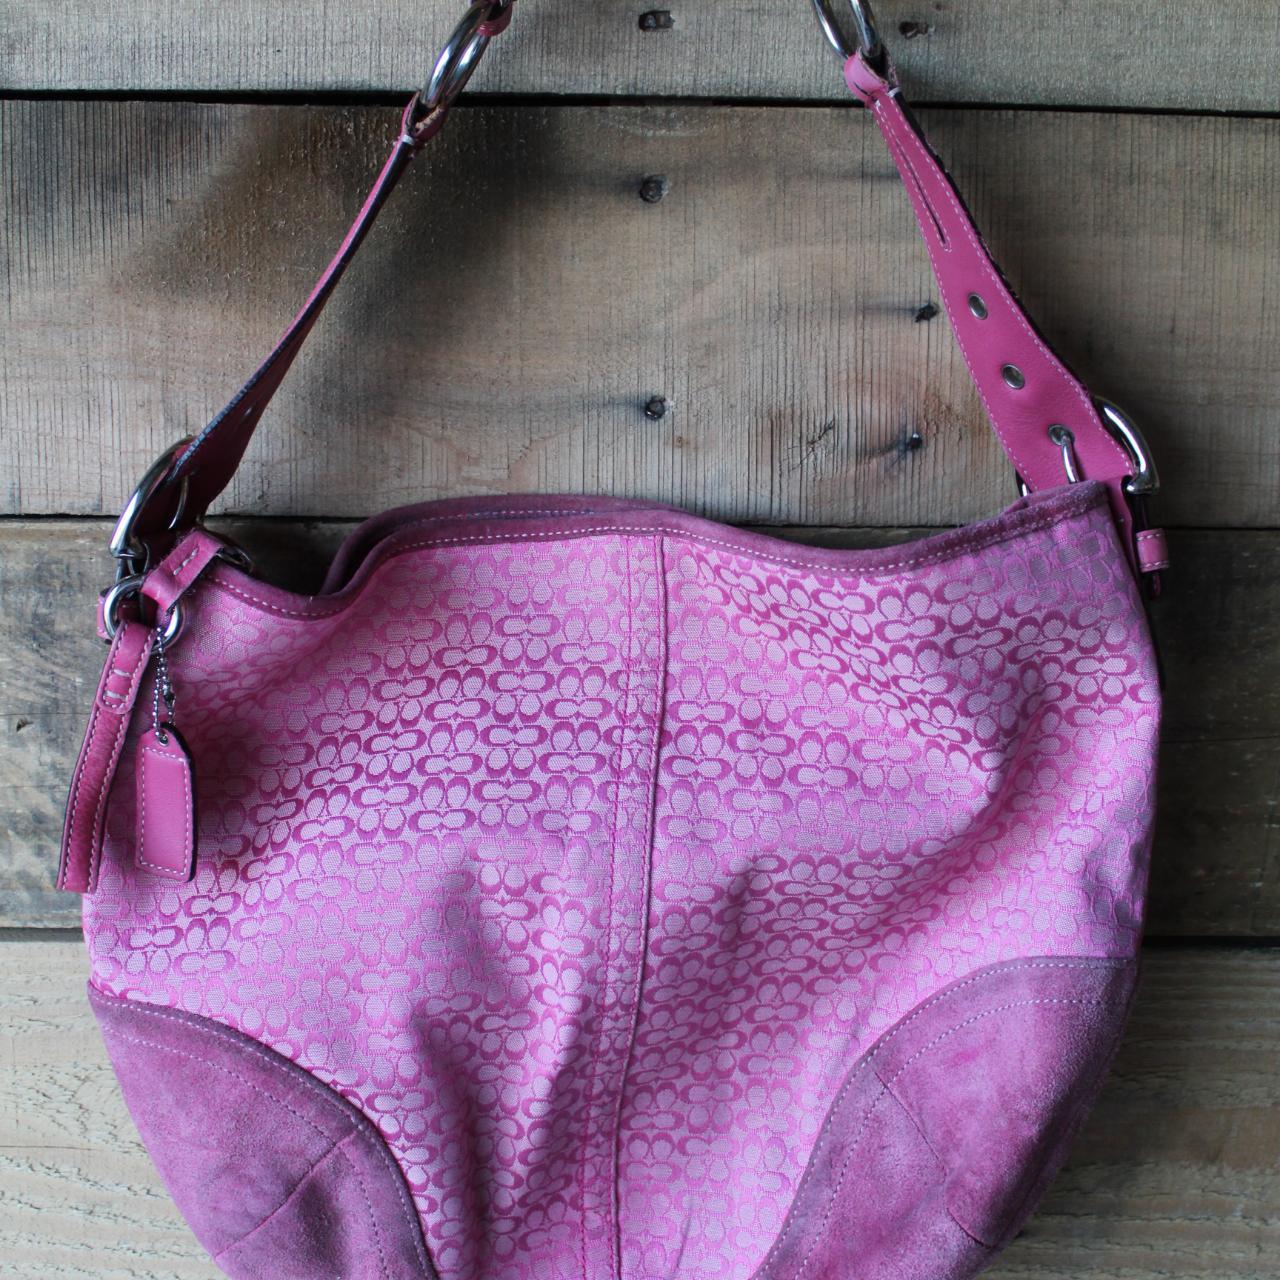 Buy Trendy Tailz Women Vintage Hobo Handbag Fashion Pleated Purse Shoulder  Bag [PINK] at Amazon.in